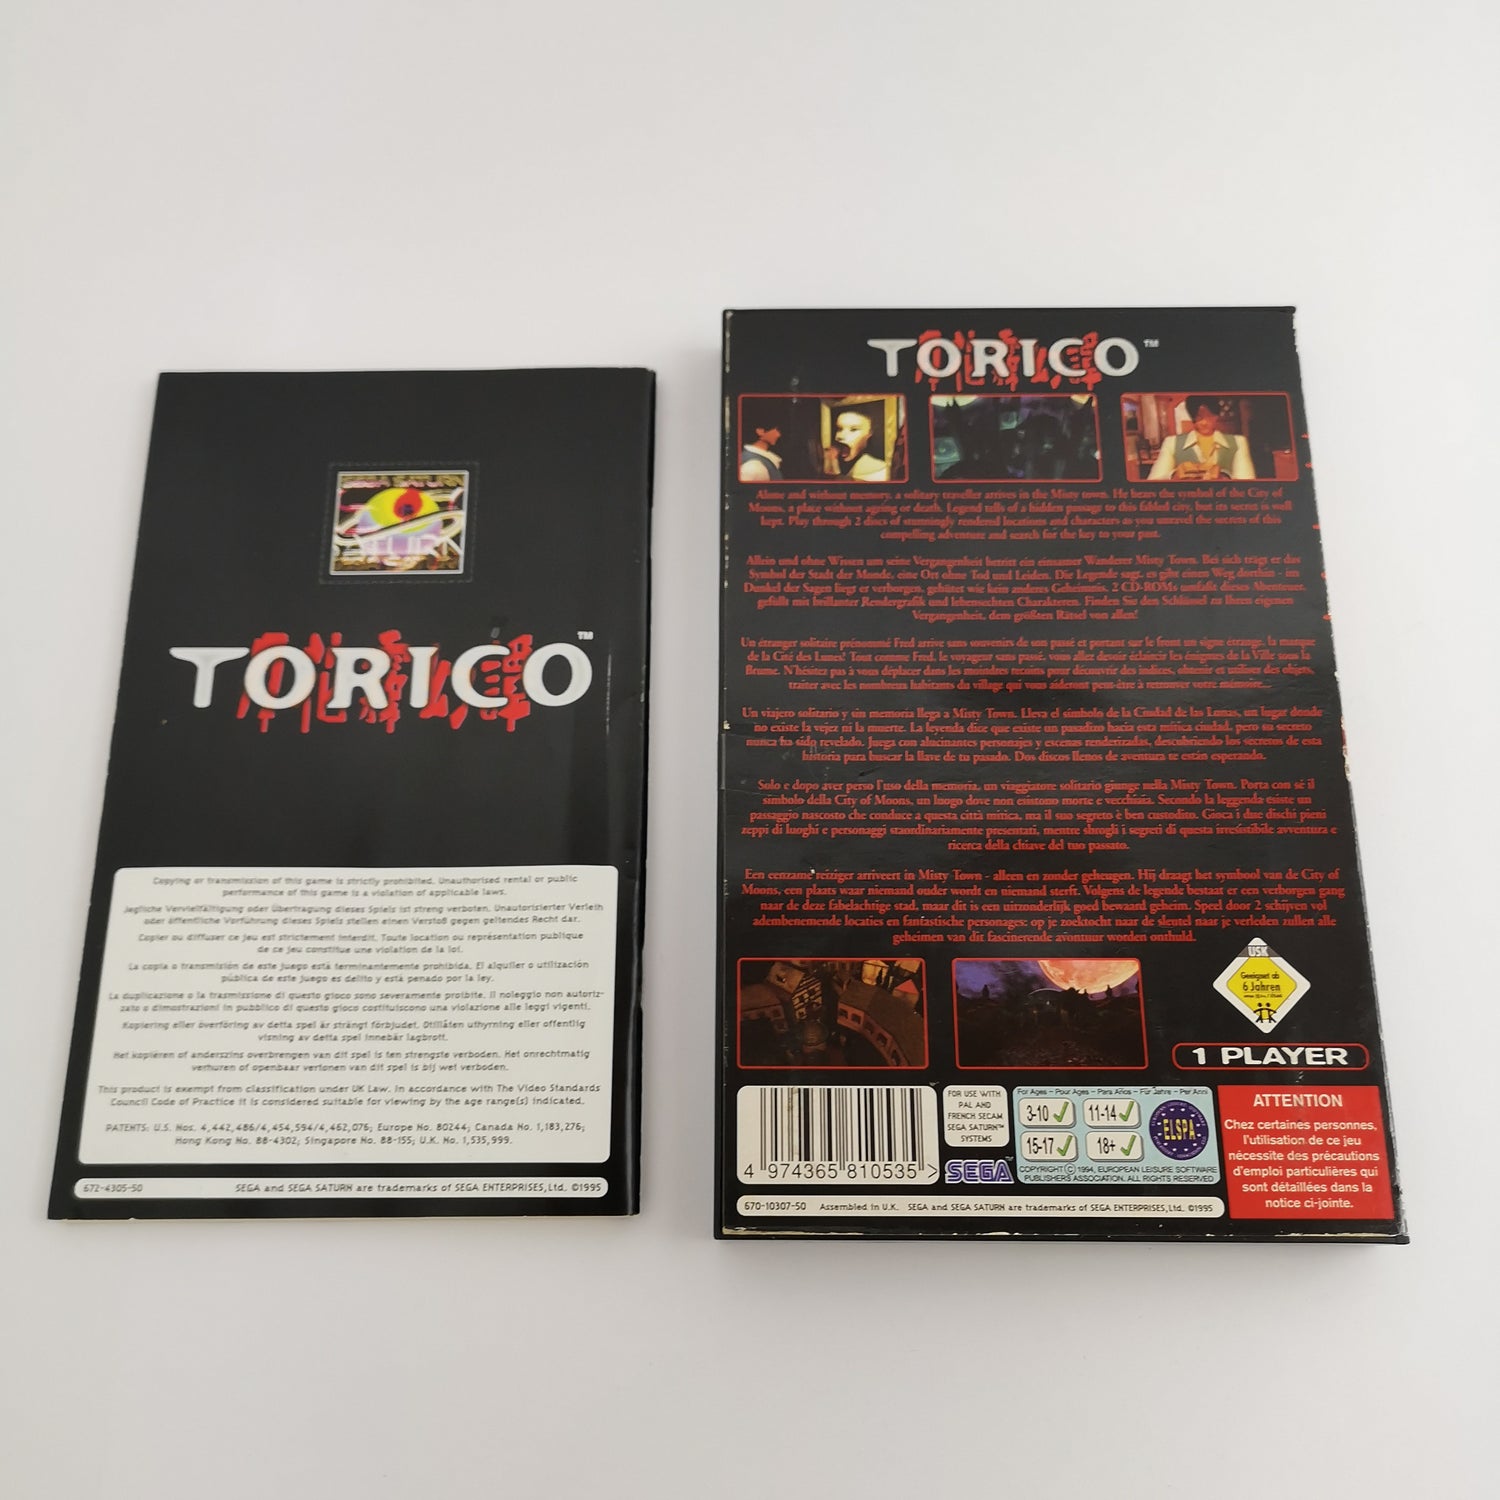 Sega Saturn Game: Torico - Original Packaging & Instructions | PAL version